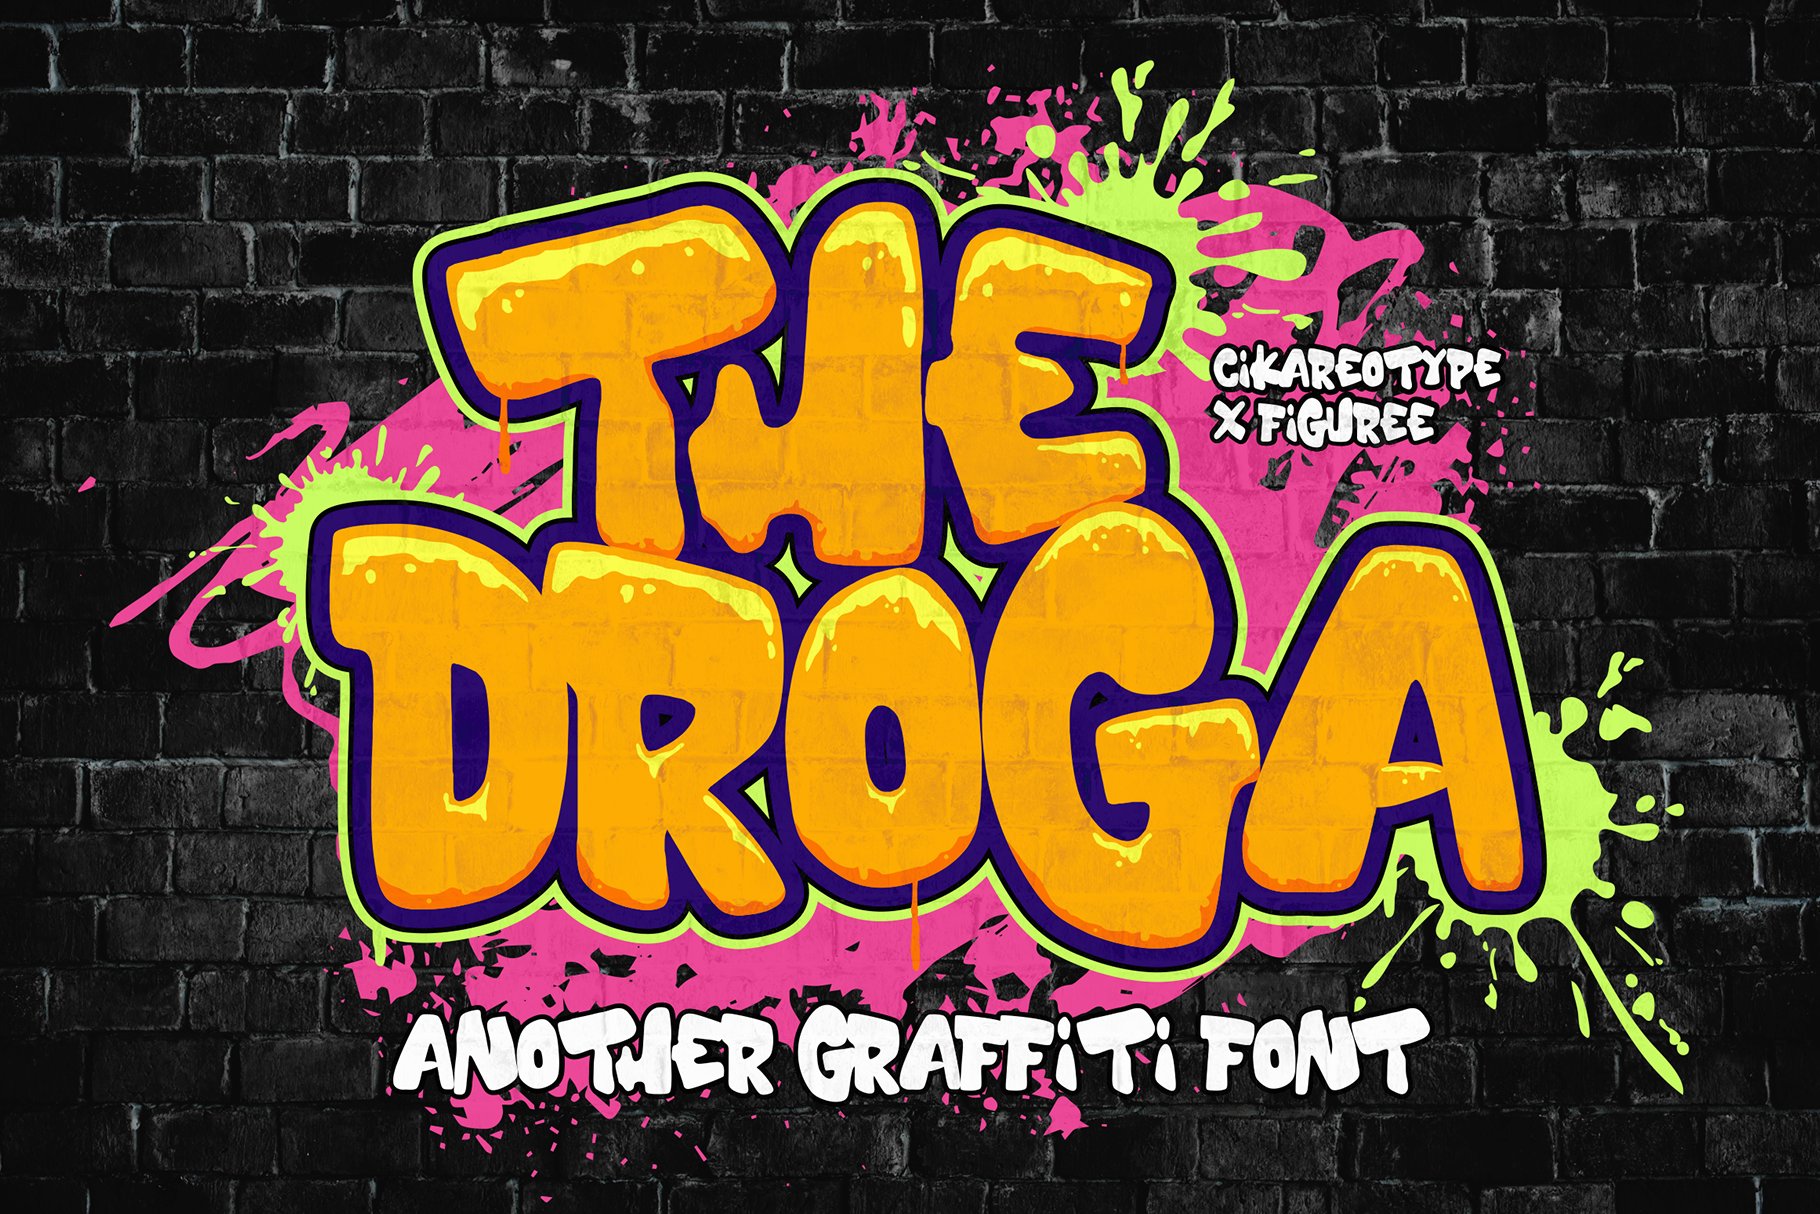 The Droga - Thick Graffiti Font cover image.